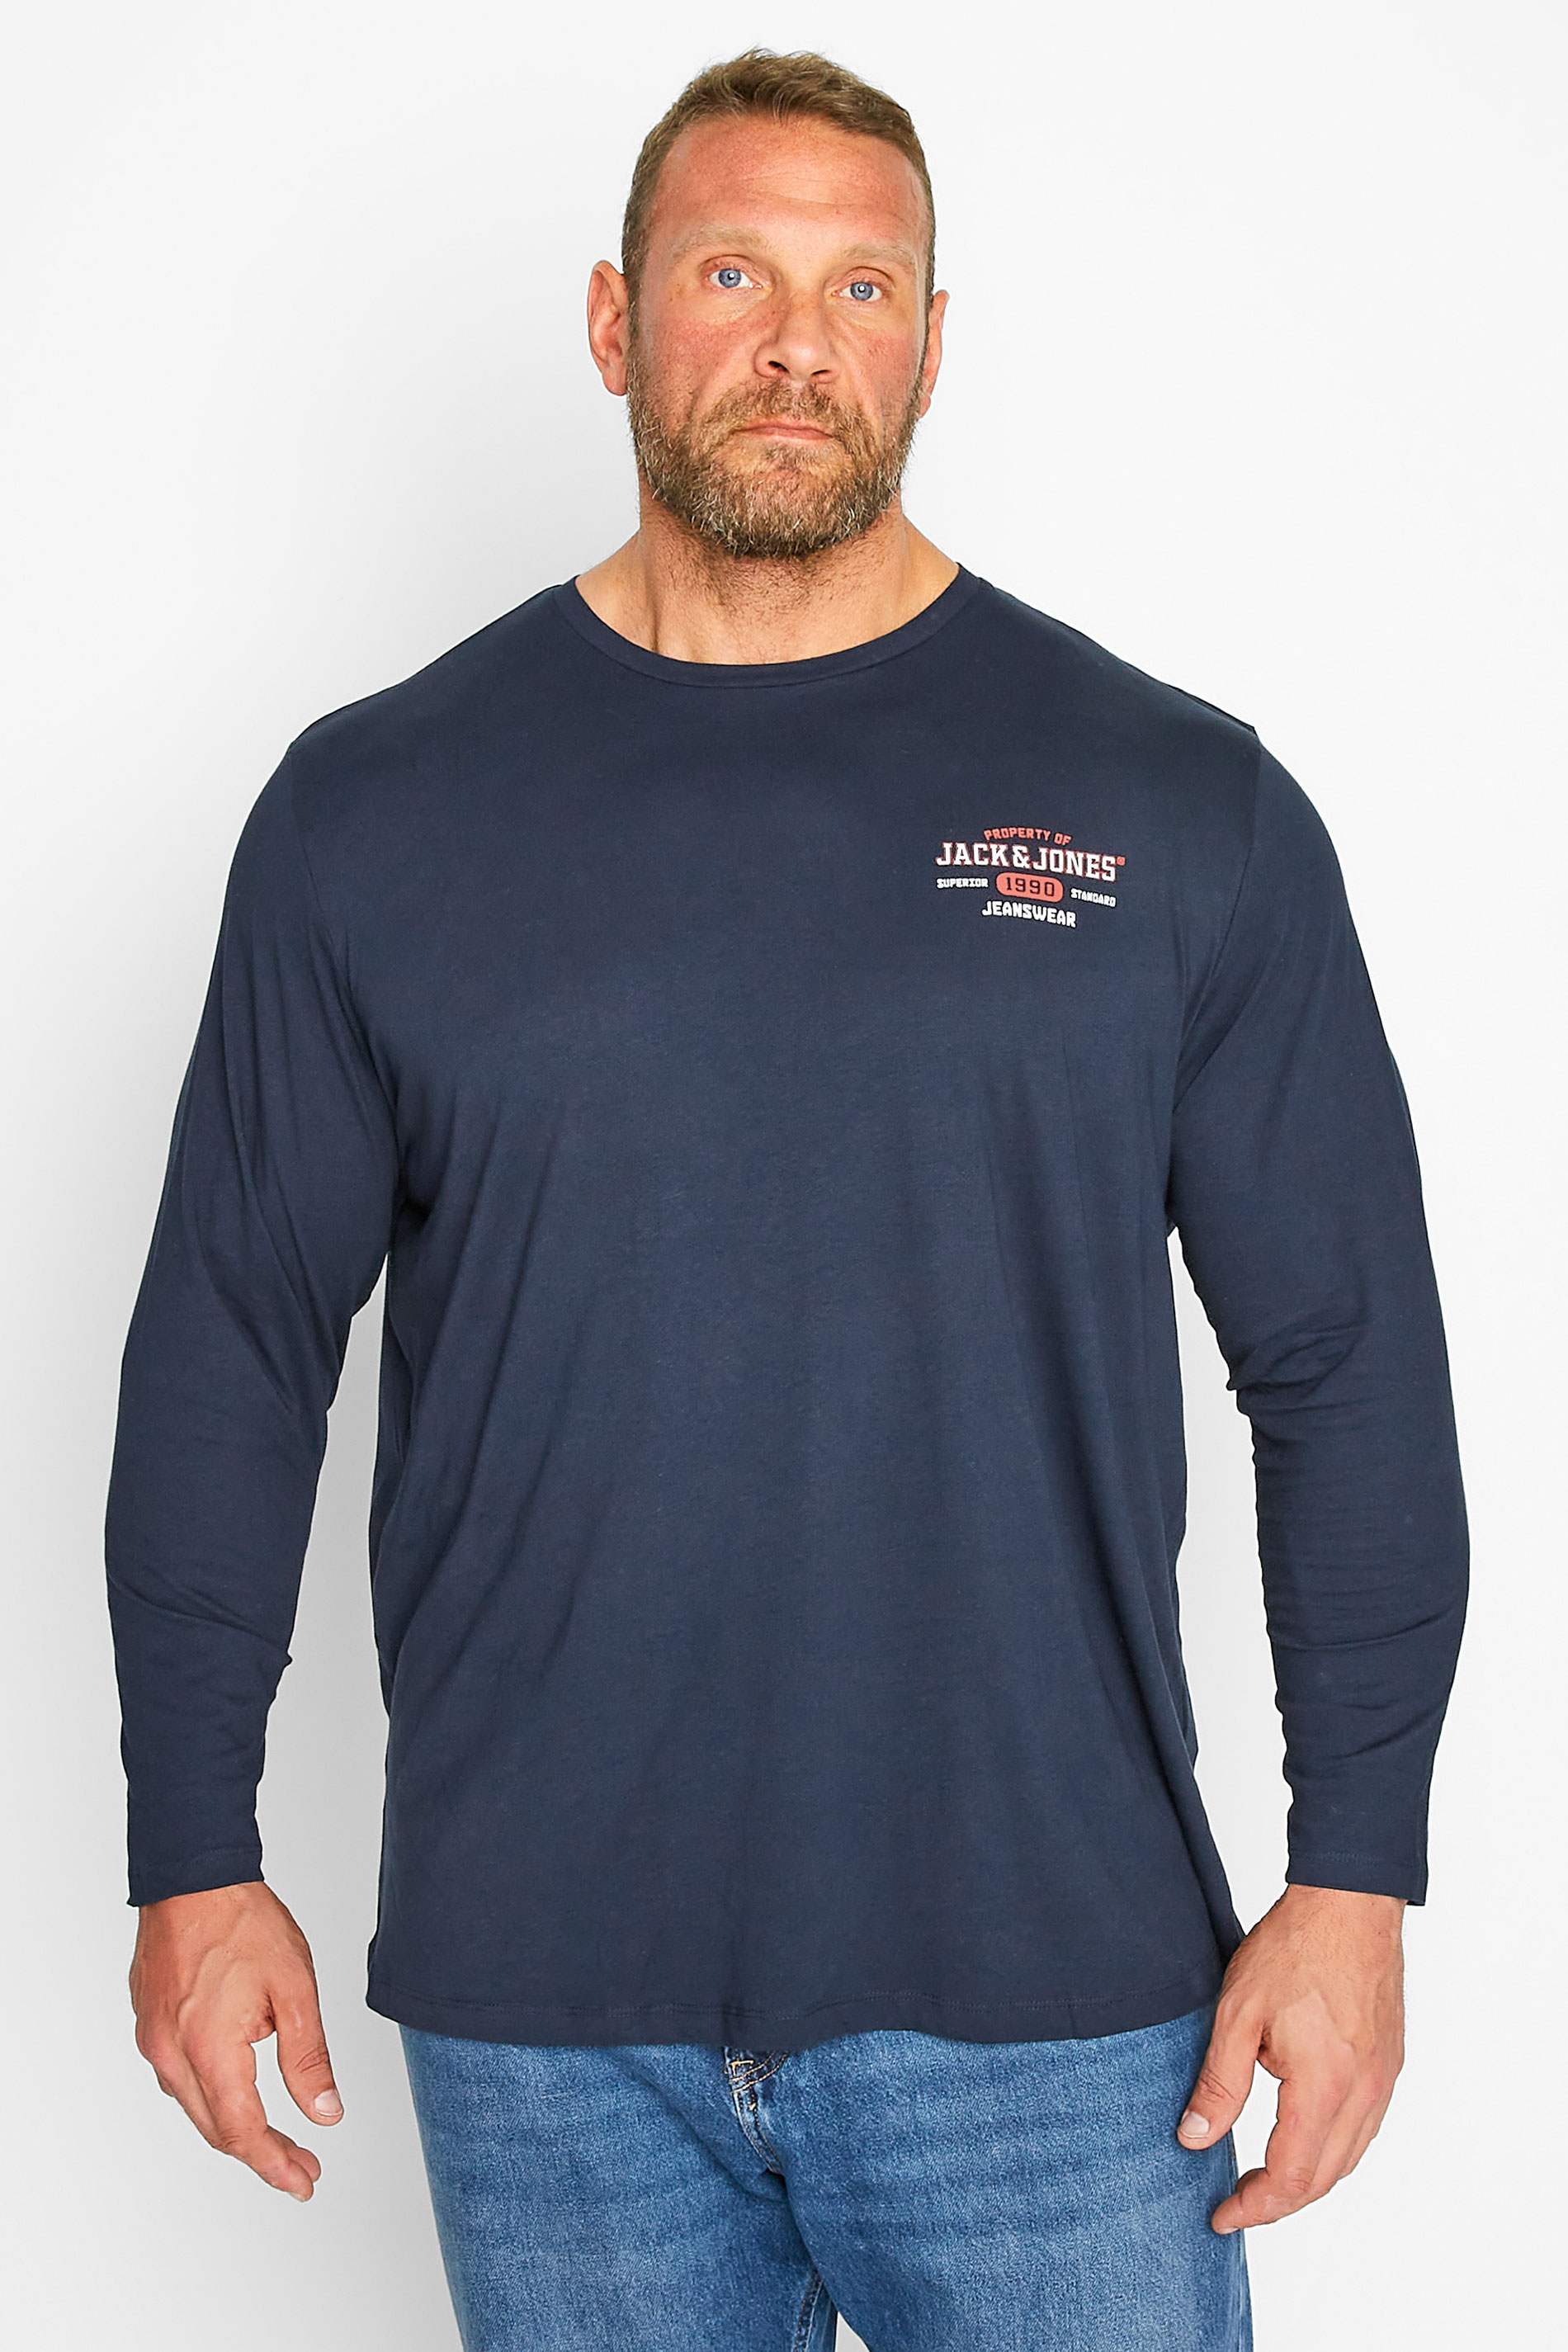 JACK & JONES Big & Tall Navy Blue Logo Long Sleeve T-Shirt | BadRhino 1